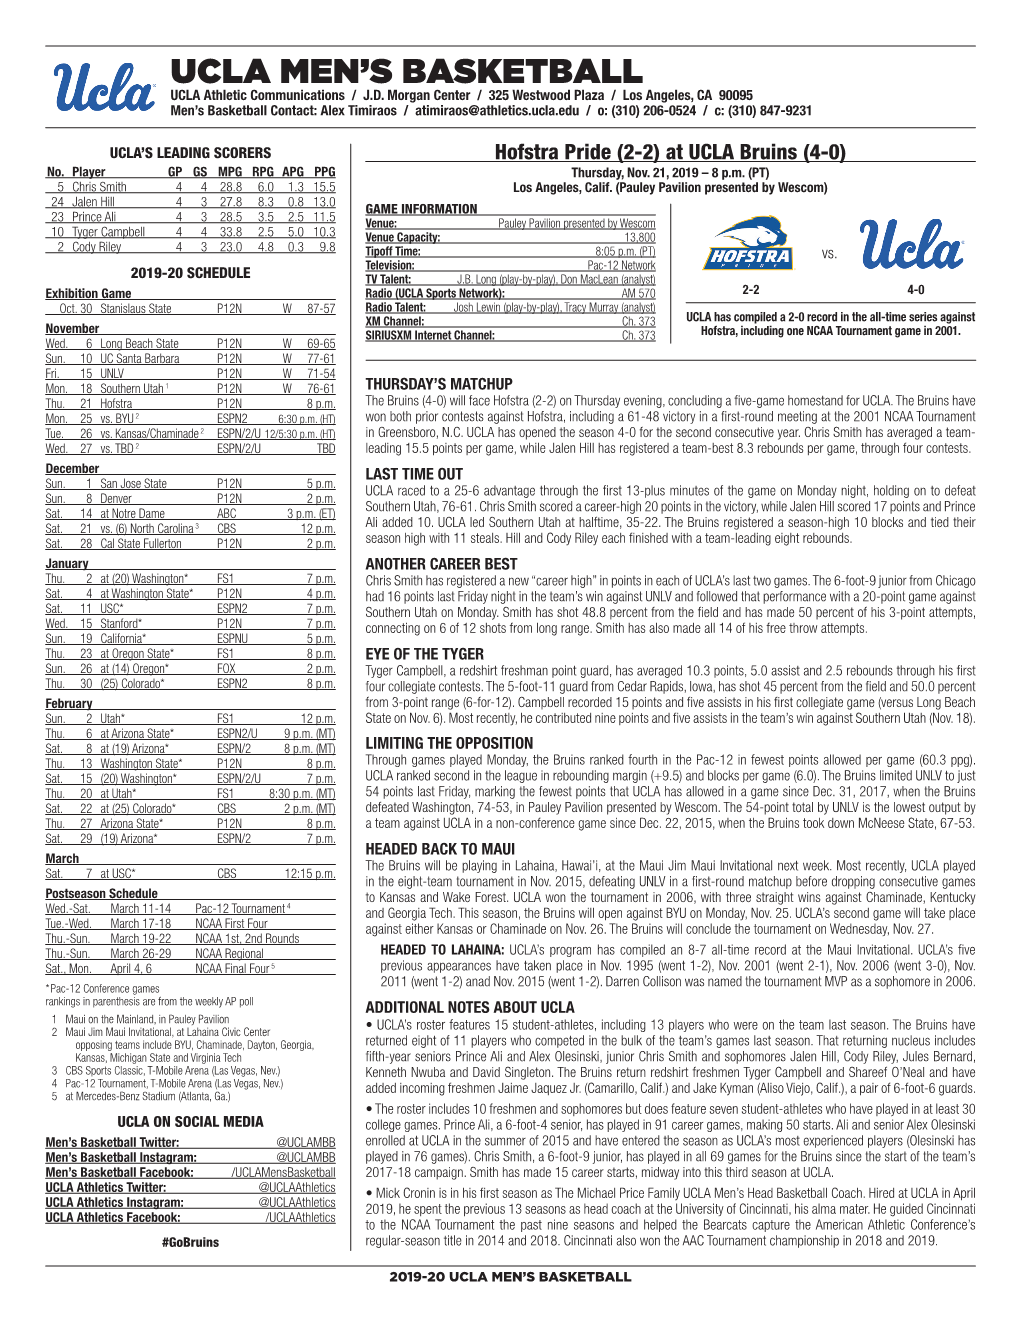 UCLA Men's Basketball UCLA’Sucla SEASON/Careerseason/Career Statistics (As of Nov 18, STATS 2019) 2019-20All Gamesroster